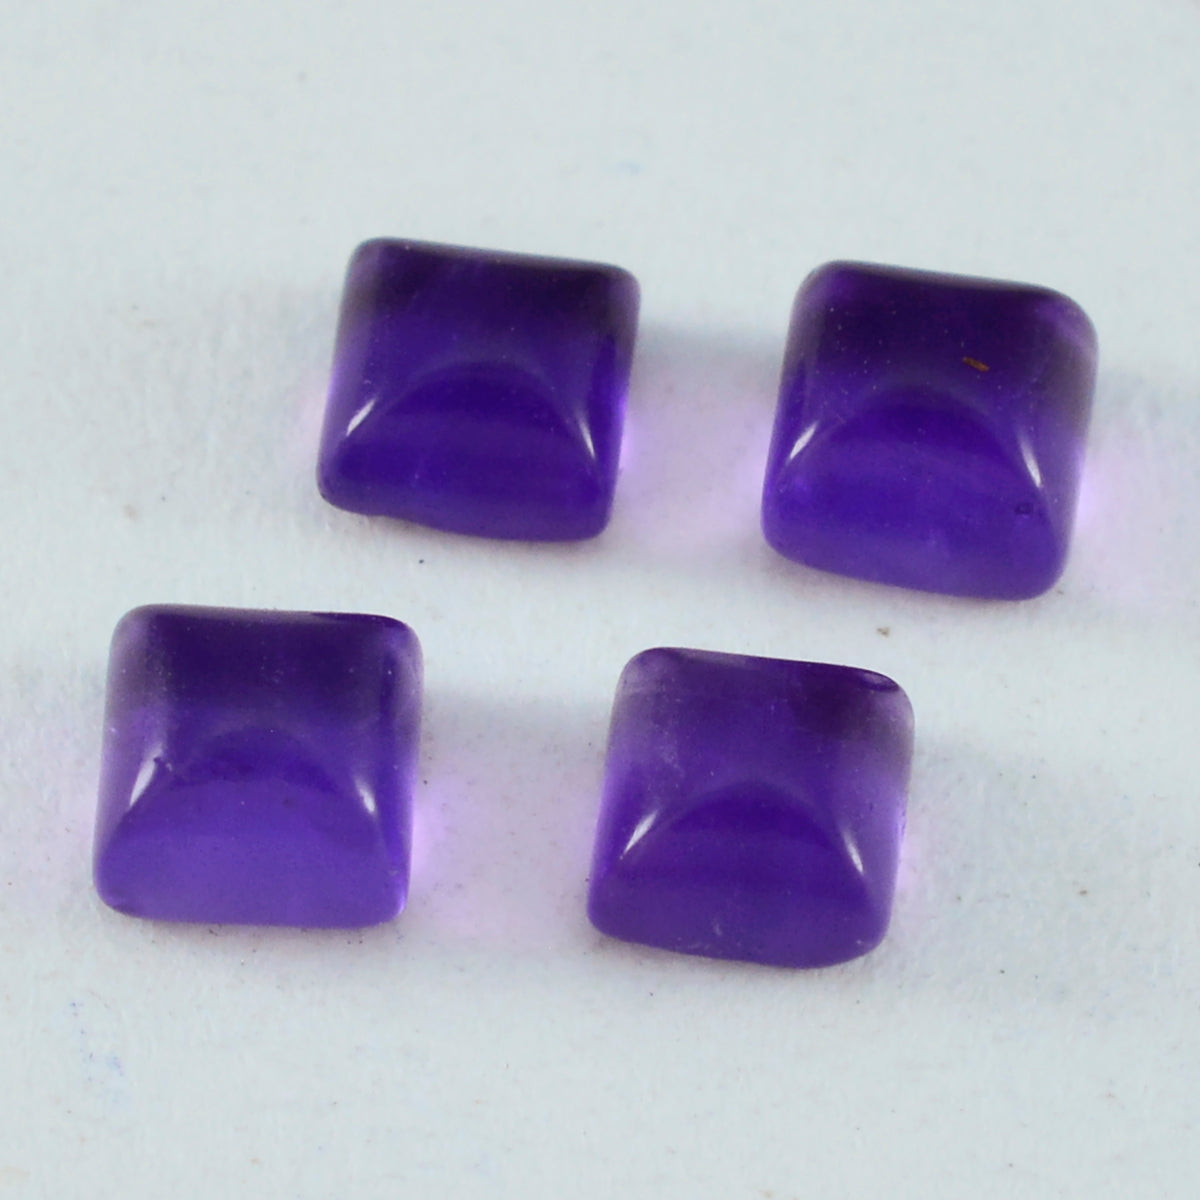 Riyogems 1PC Purple Amethyst Cabochon 6x6 mm Square Shape beautiful Quality Gems